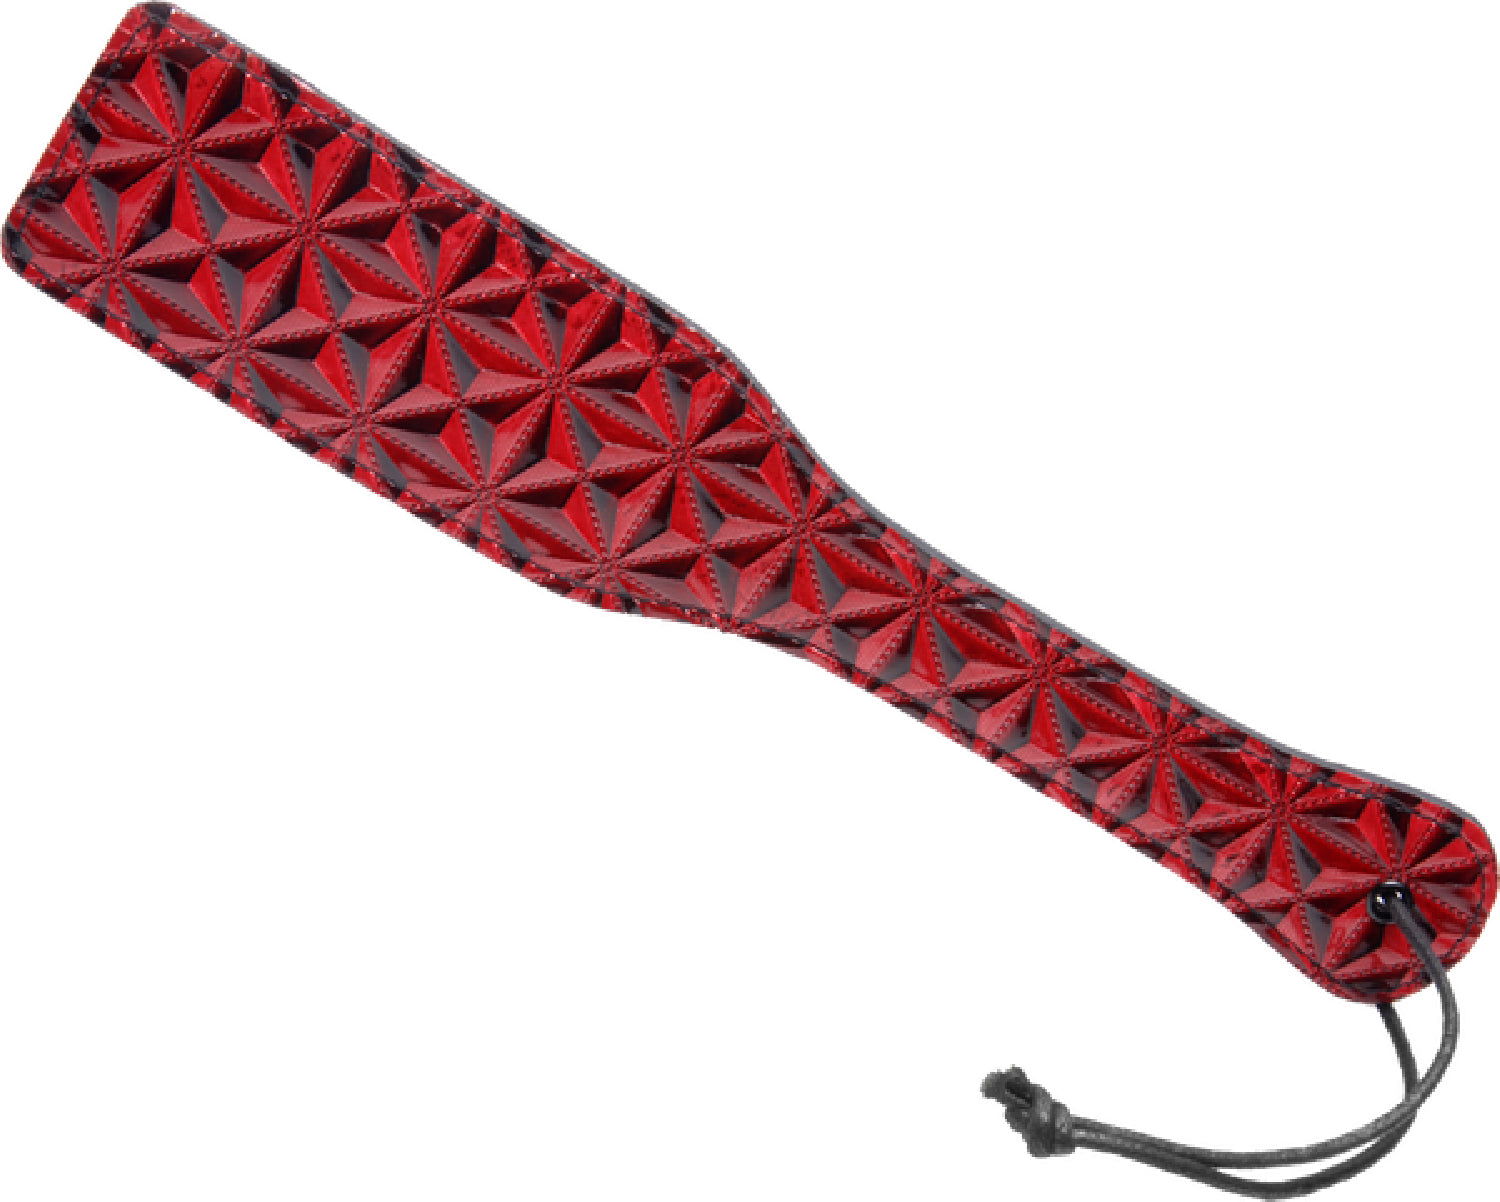 Crimson Tied Steel Enforced Spanking Paddle